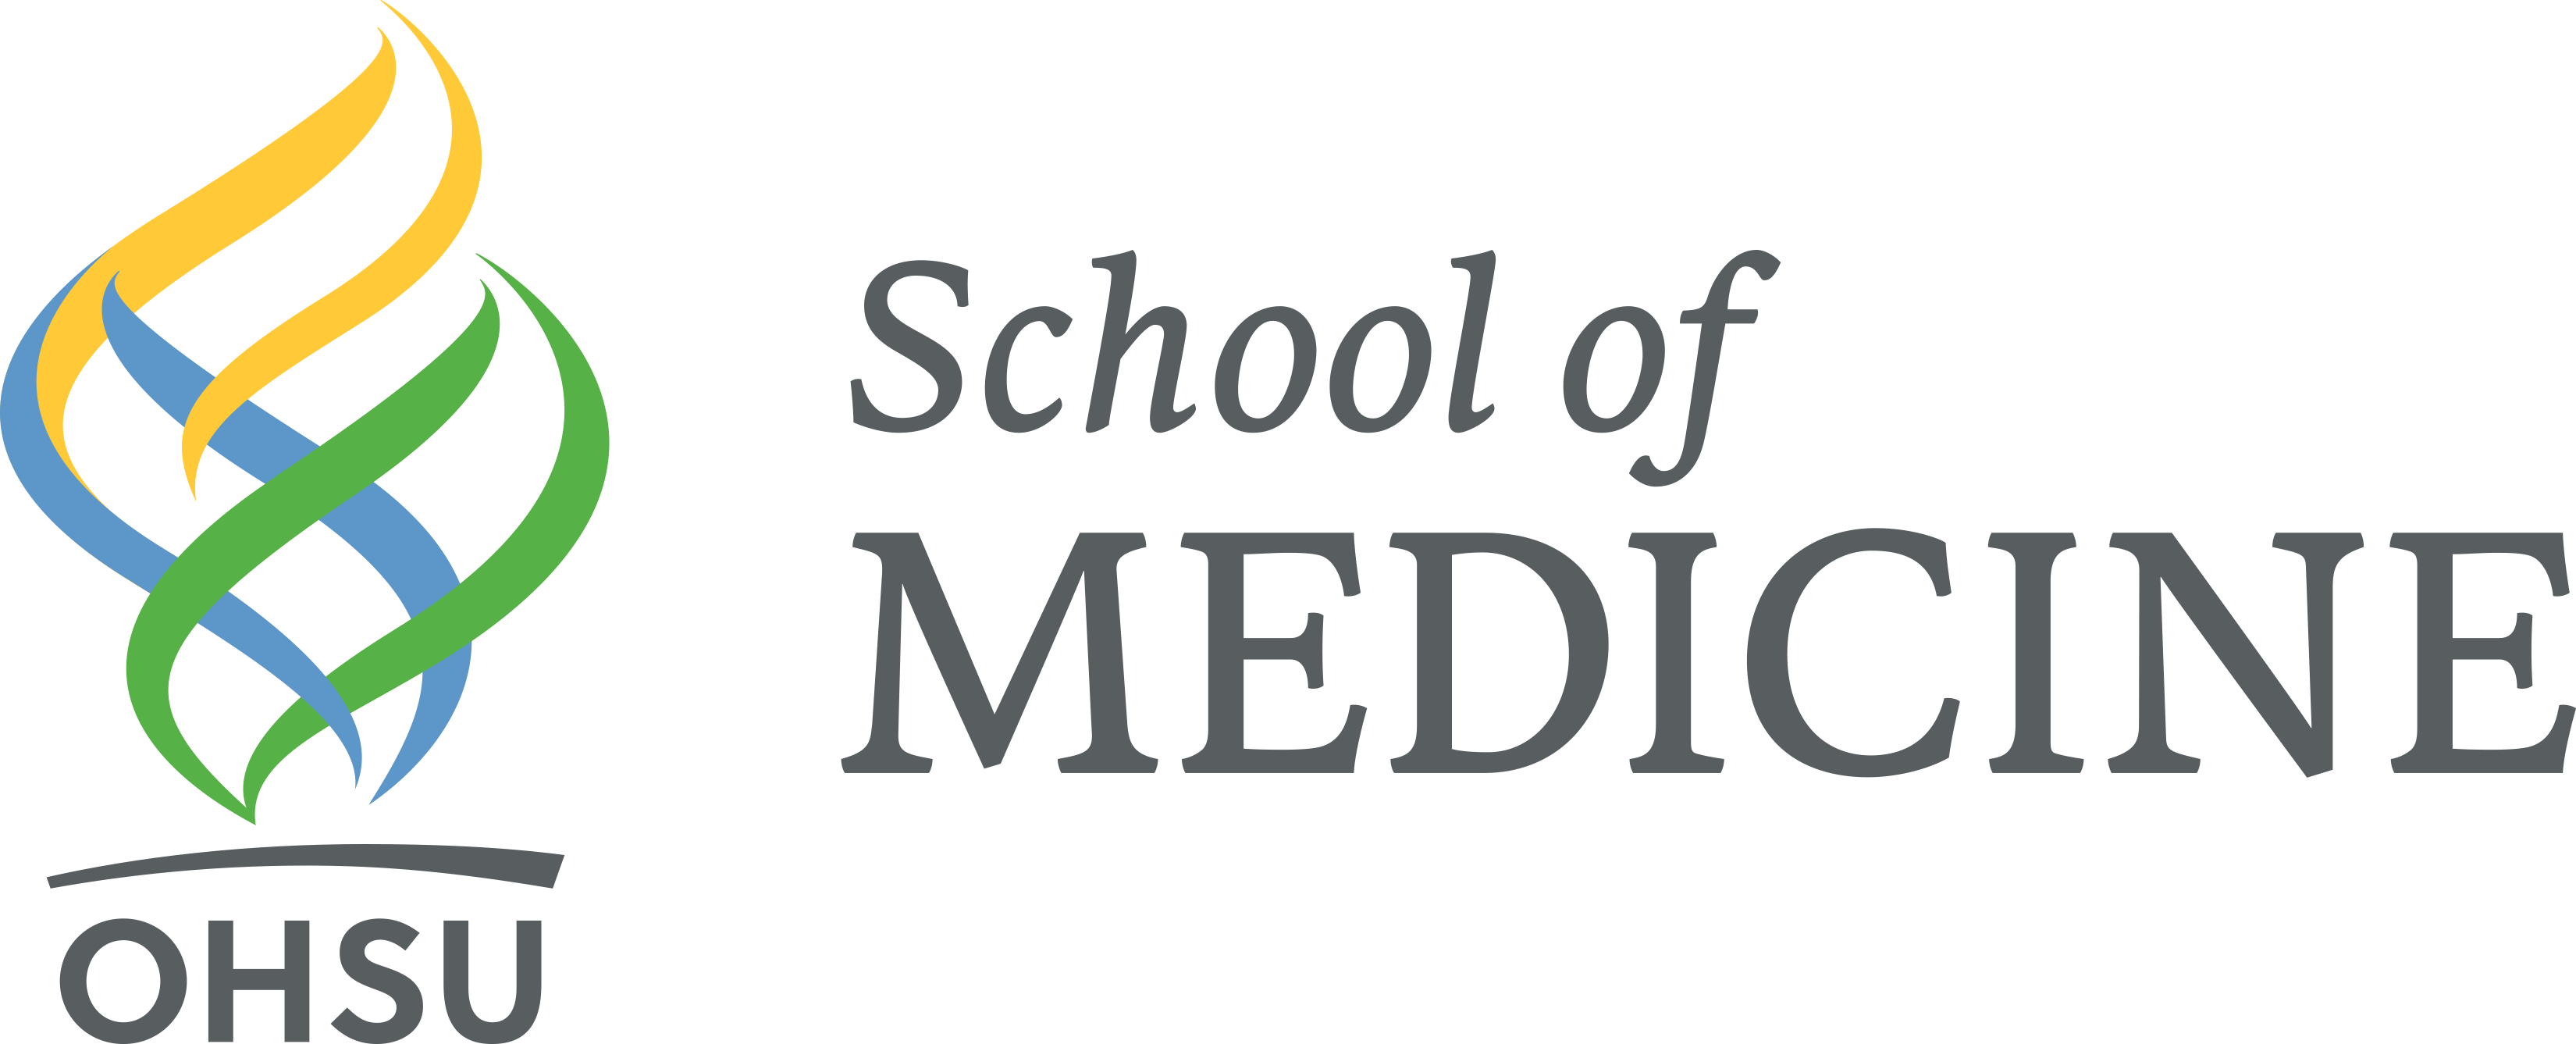 OHSU School of Medicine